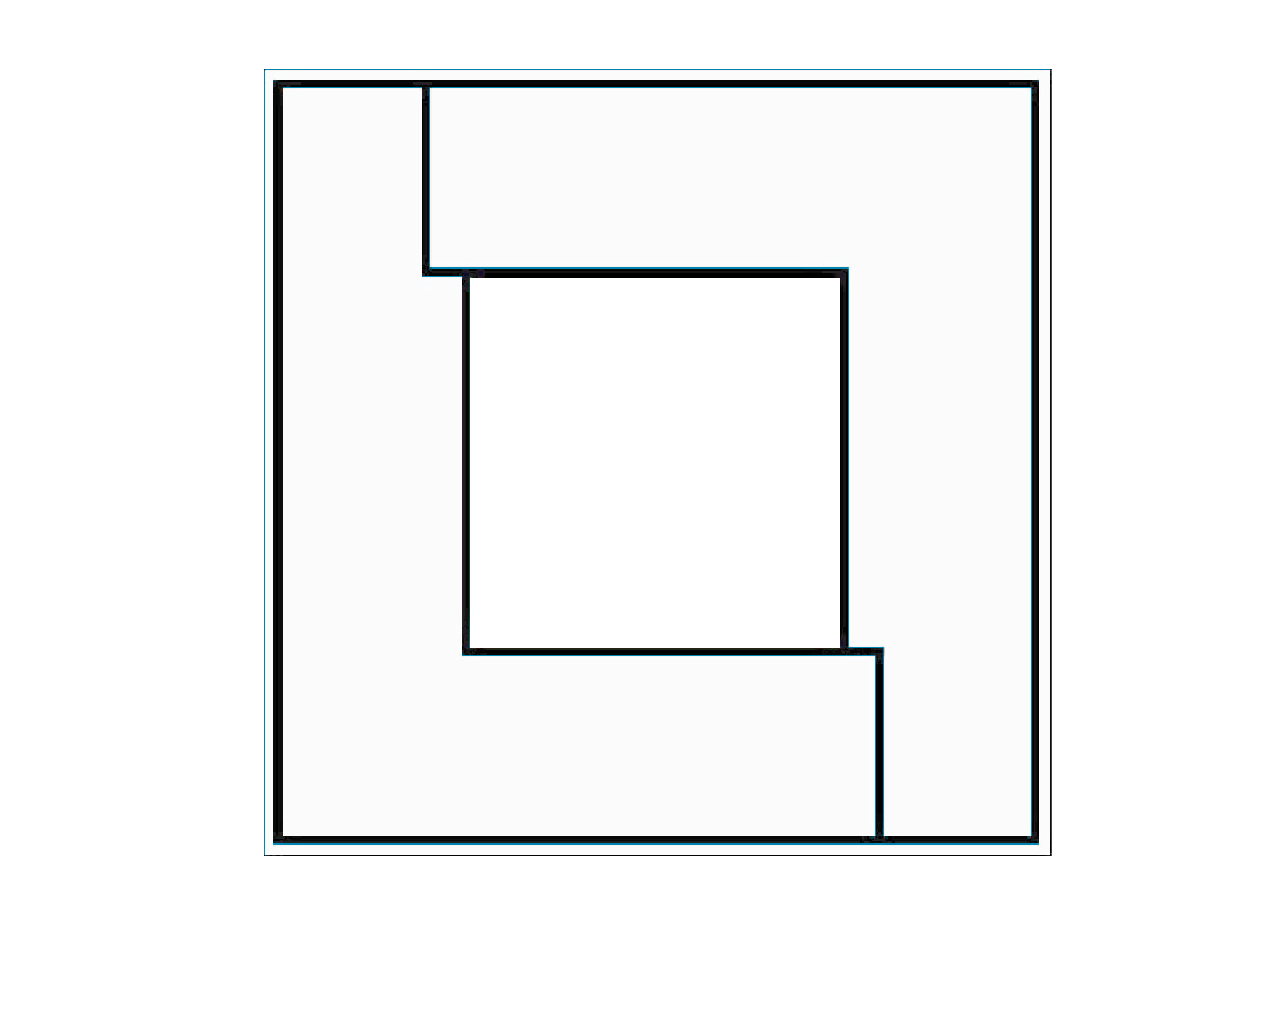 DLL Dance School